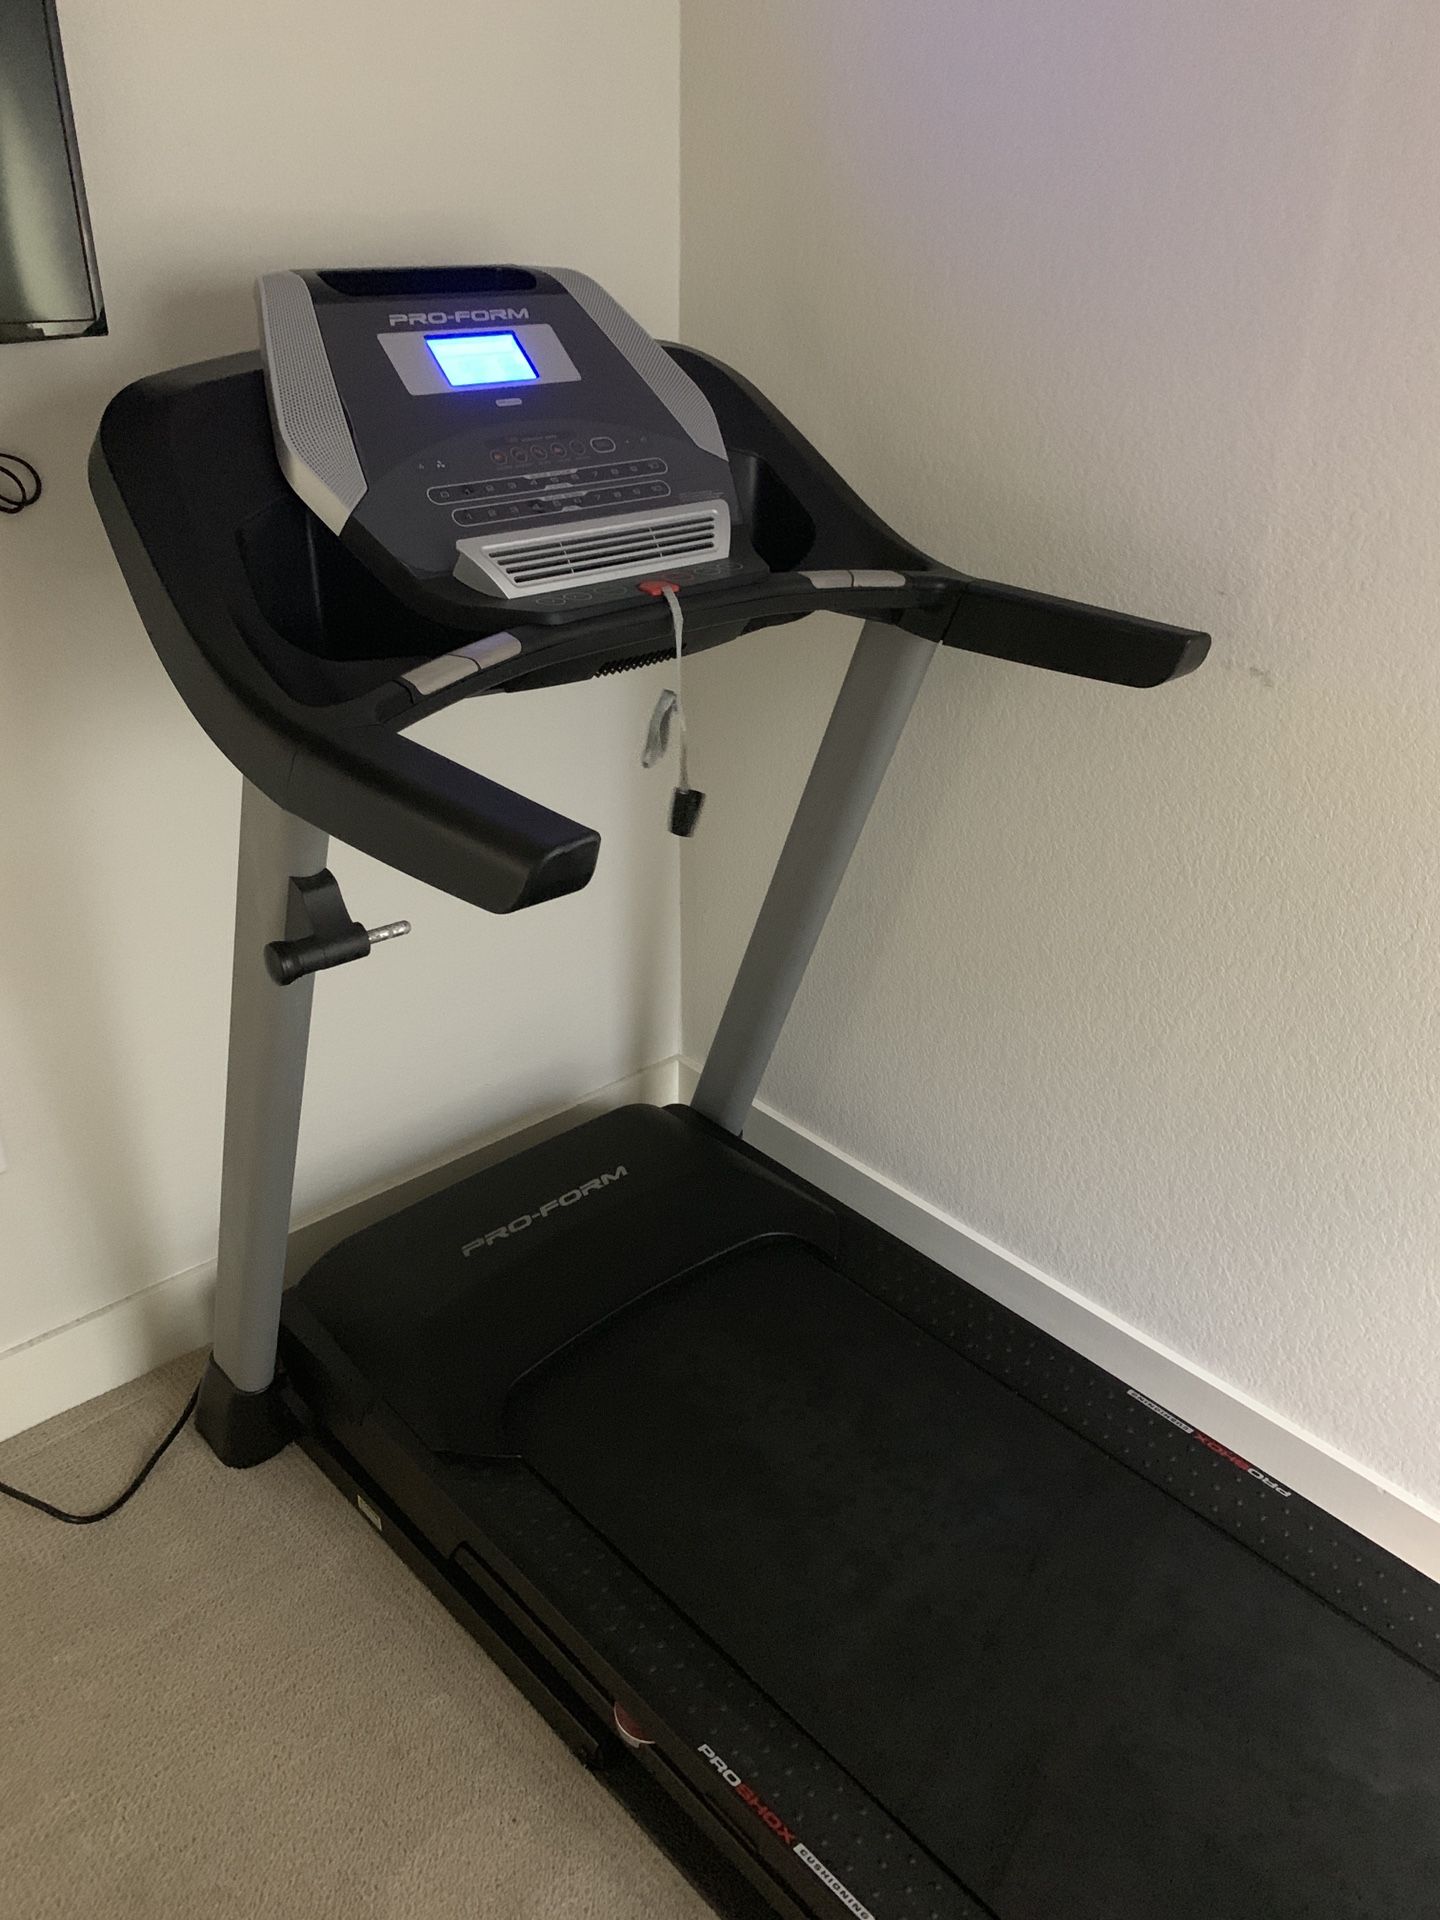 ProForm ZT6 Treadmill